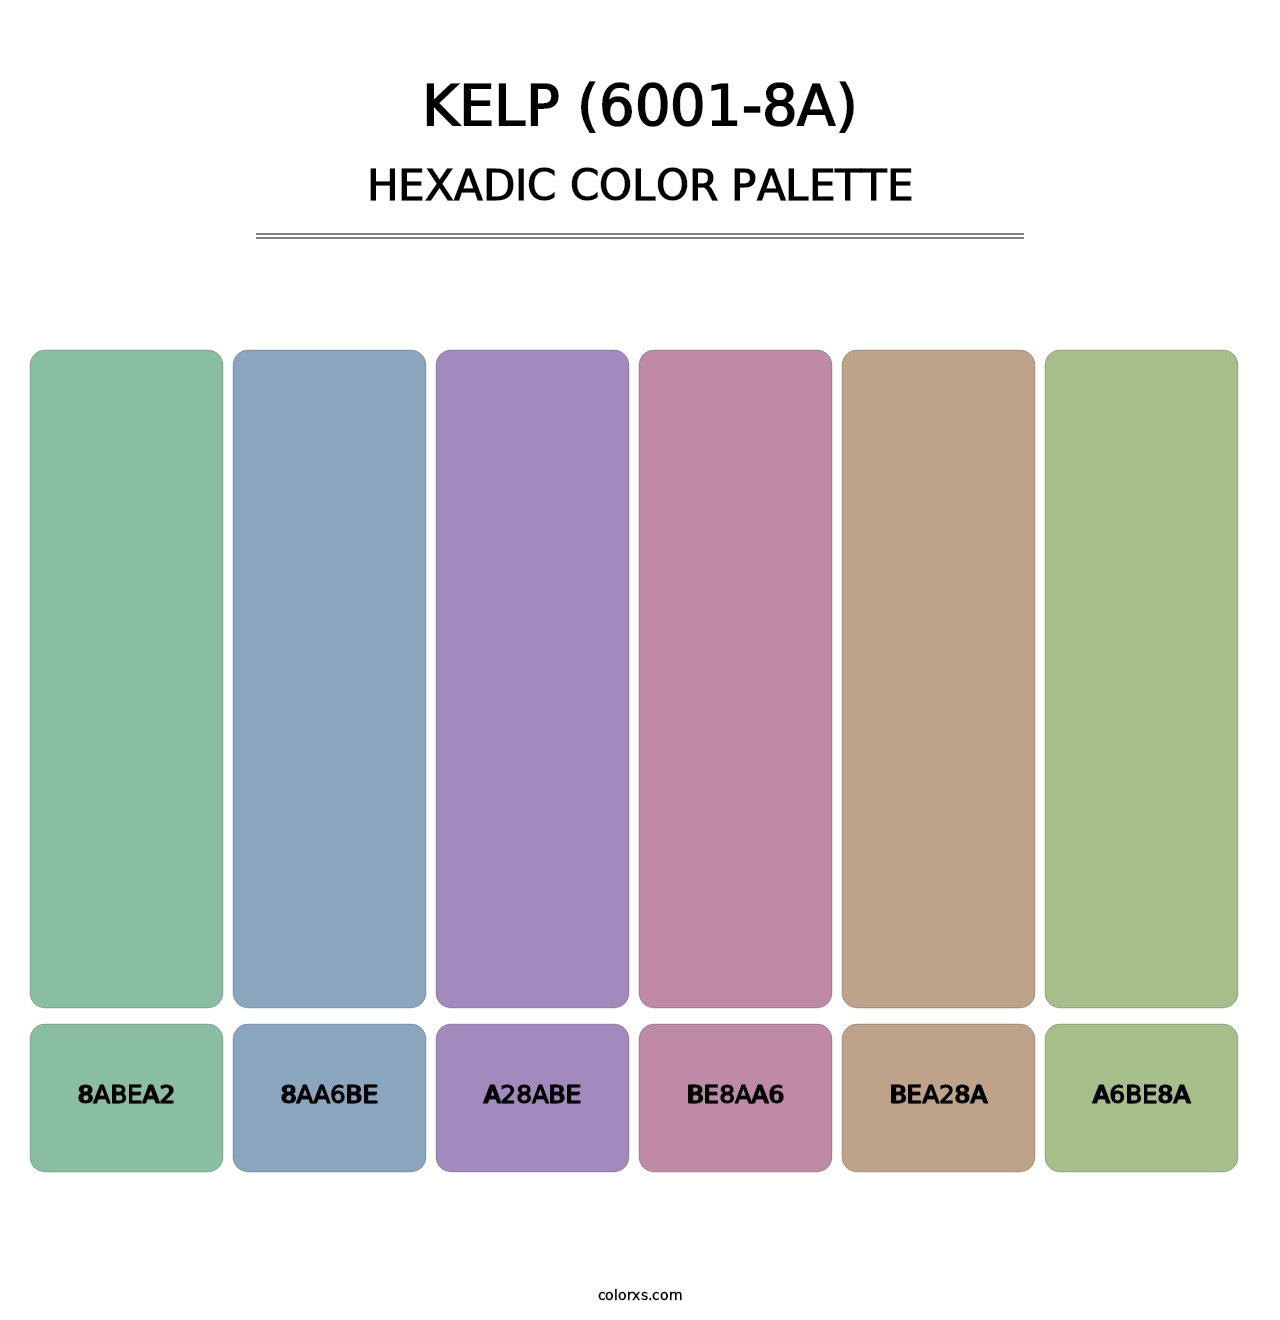 Kelp (6001-8A) - Hexadic Color Palette